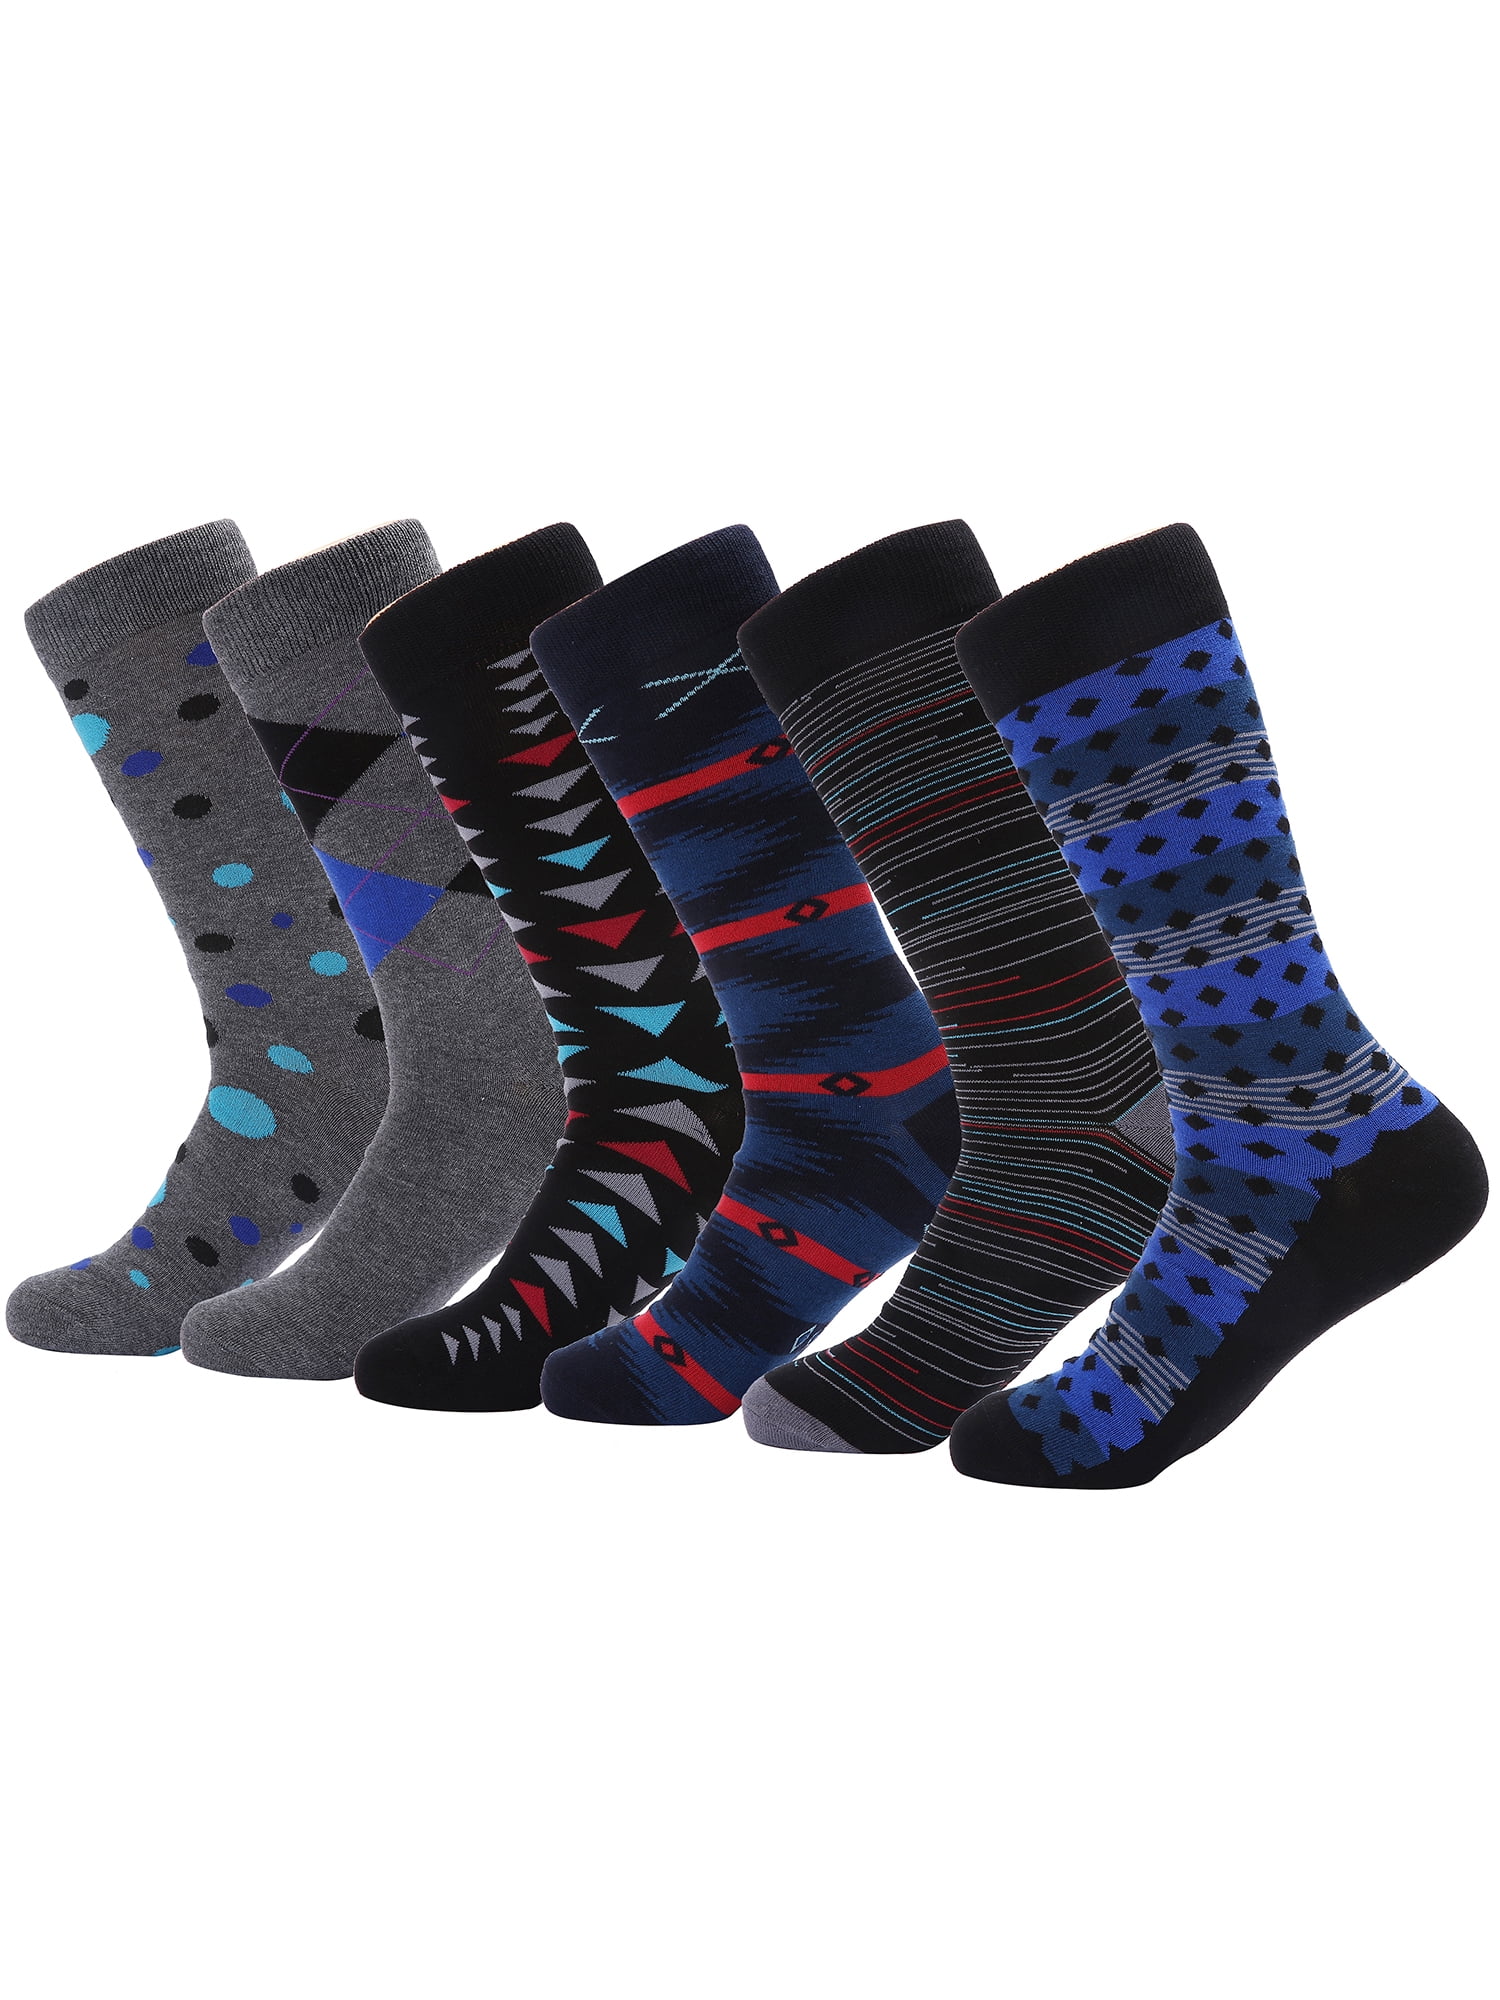 8-12 Mens Cotton Dress Socks 6 Pack Business Classic Pattern Crew Sock Fit Shoe Size 